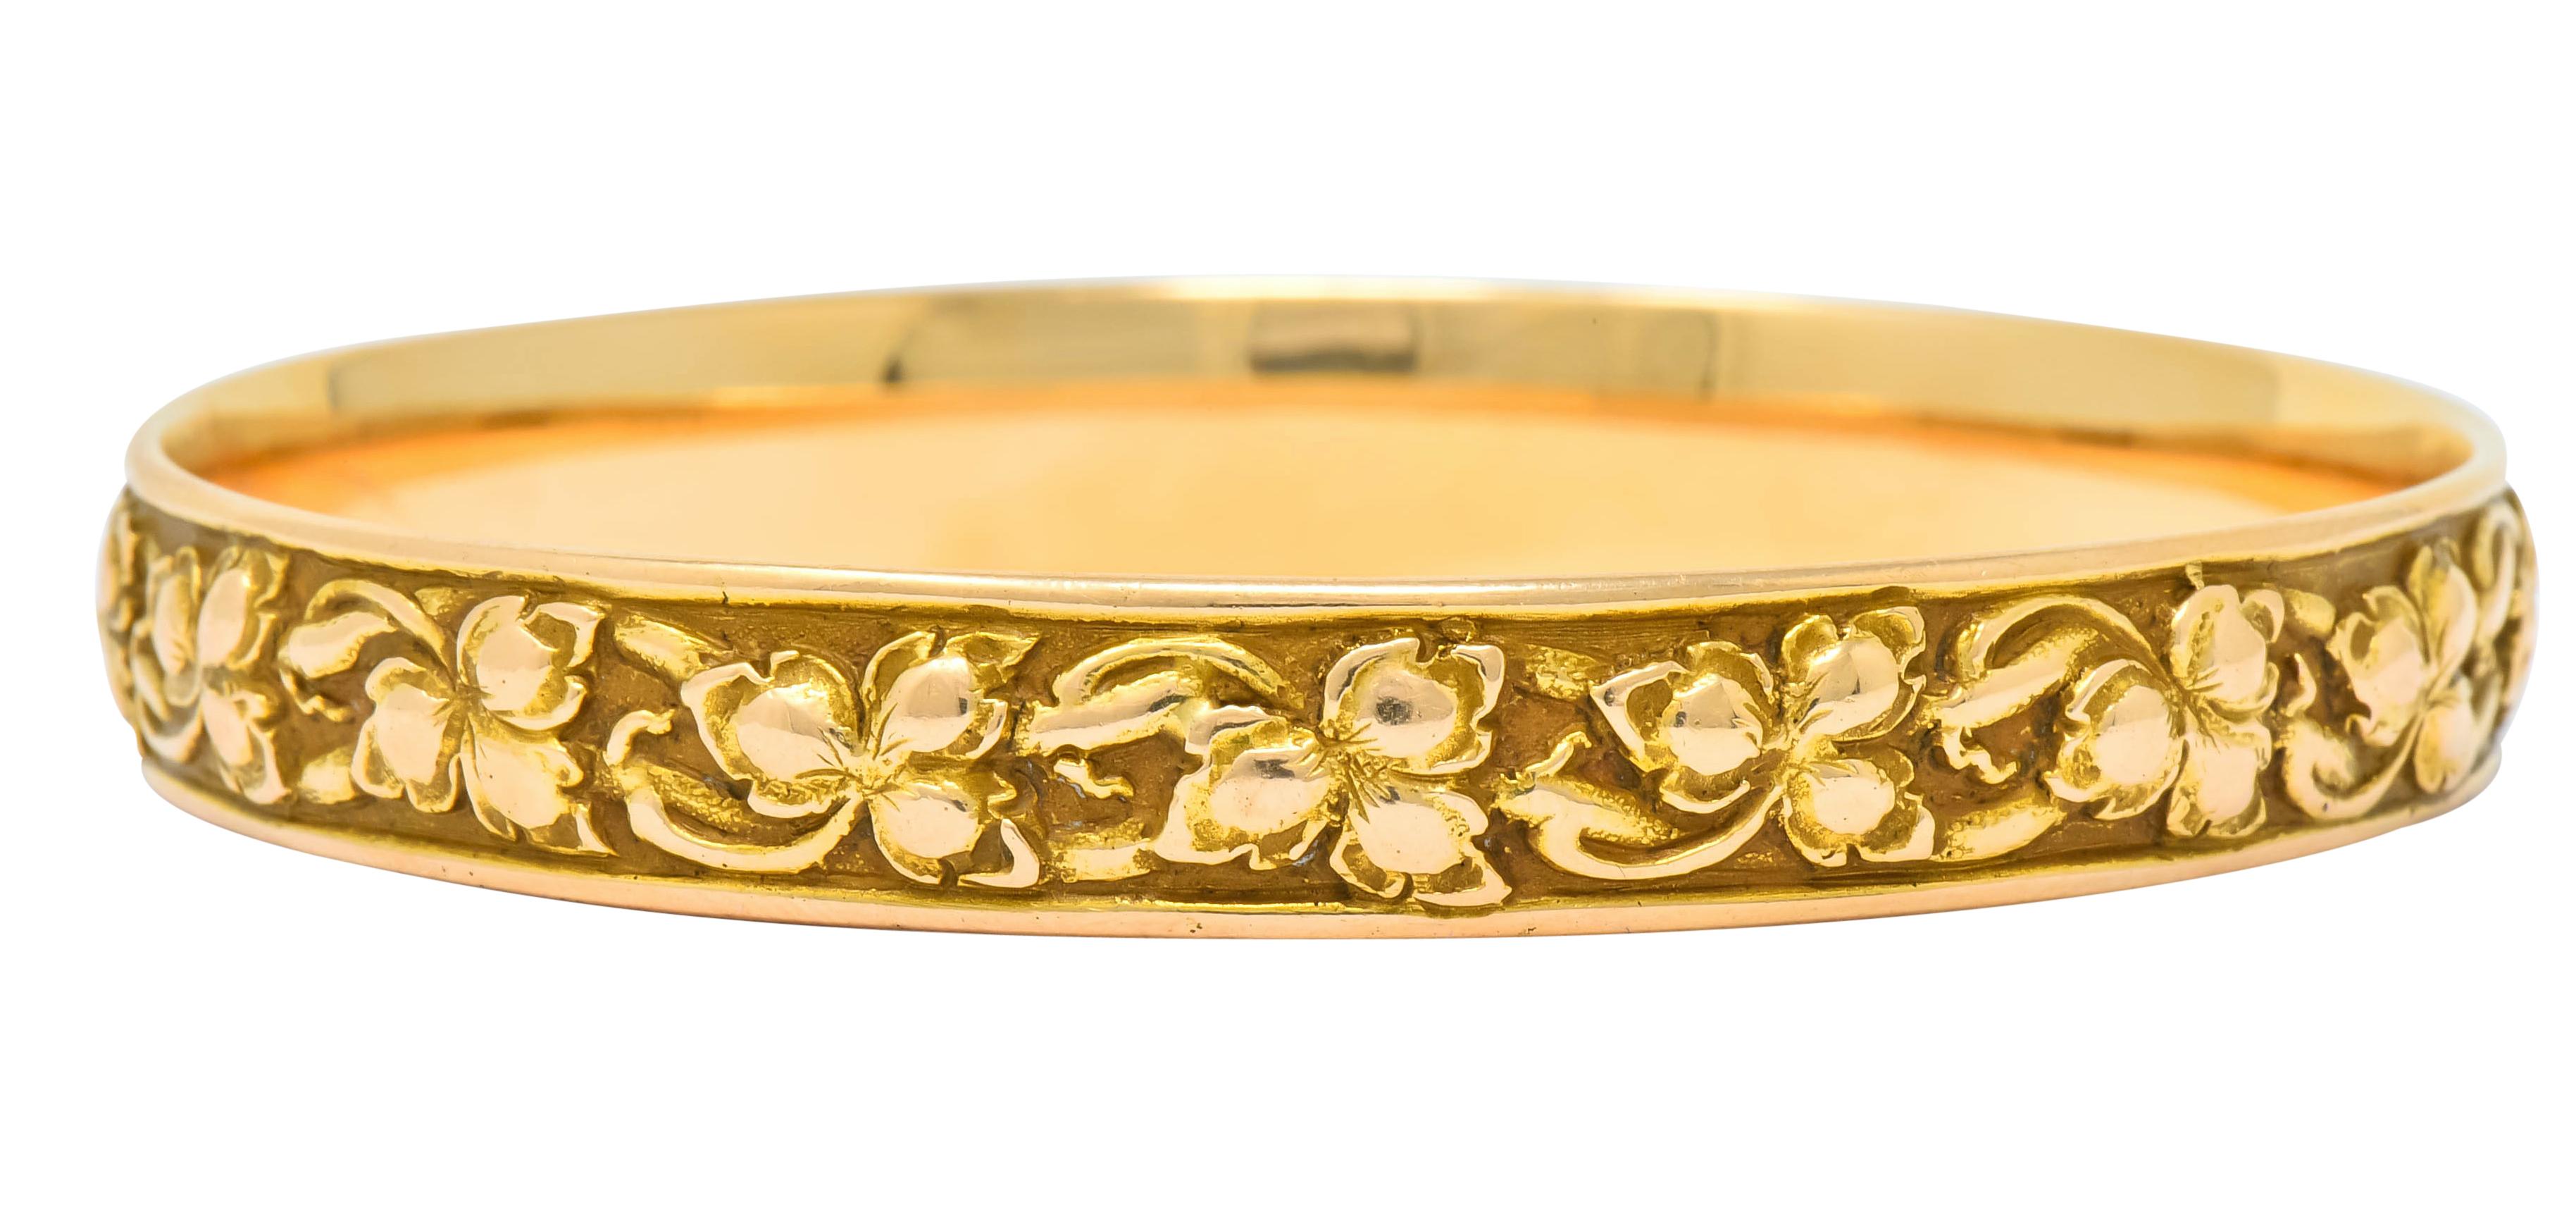 Shreve & Co. Art Nouveau 14 Karat Gold Ivy Foliate Bangle Bracelet 1